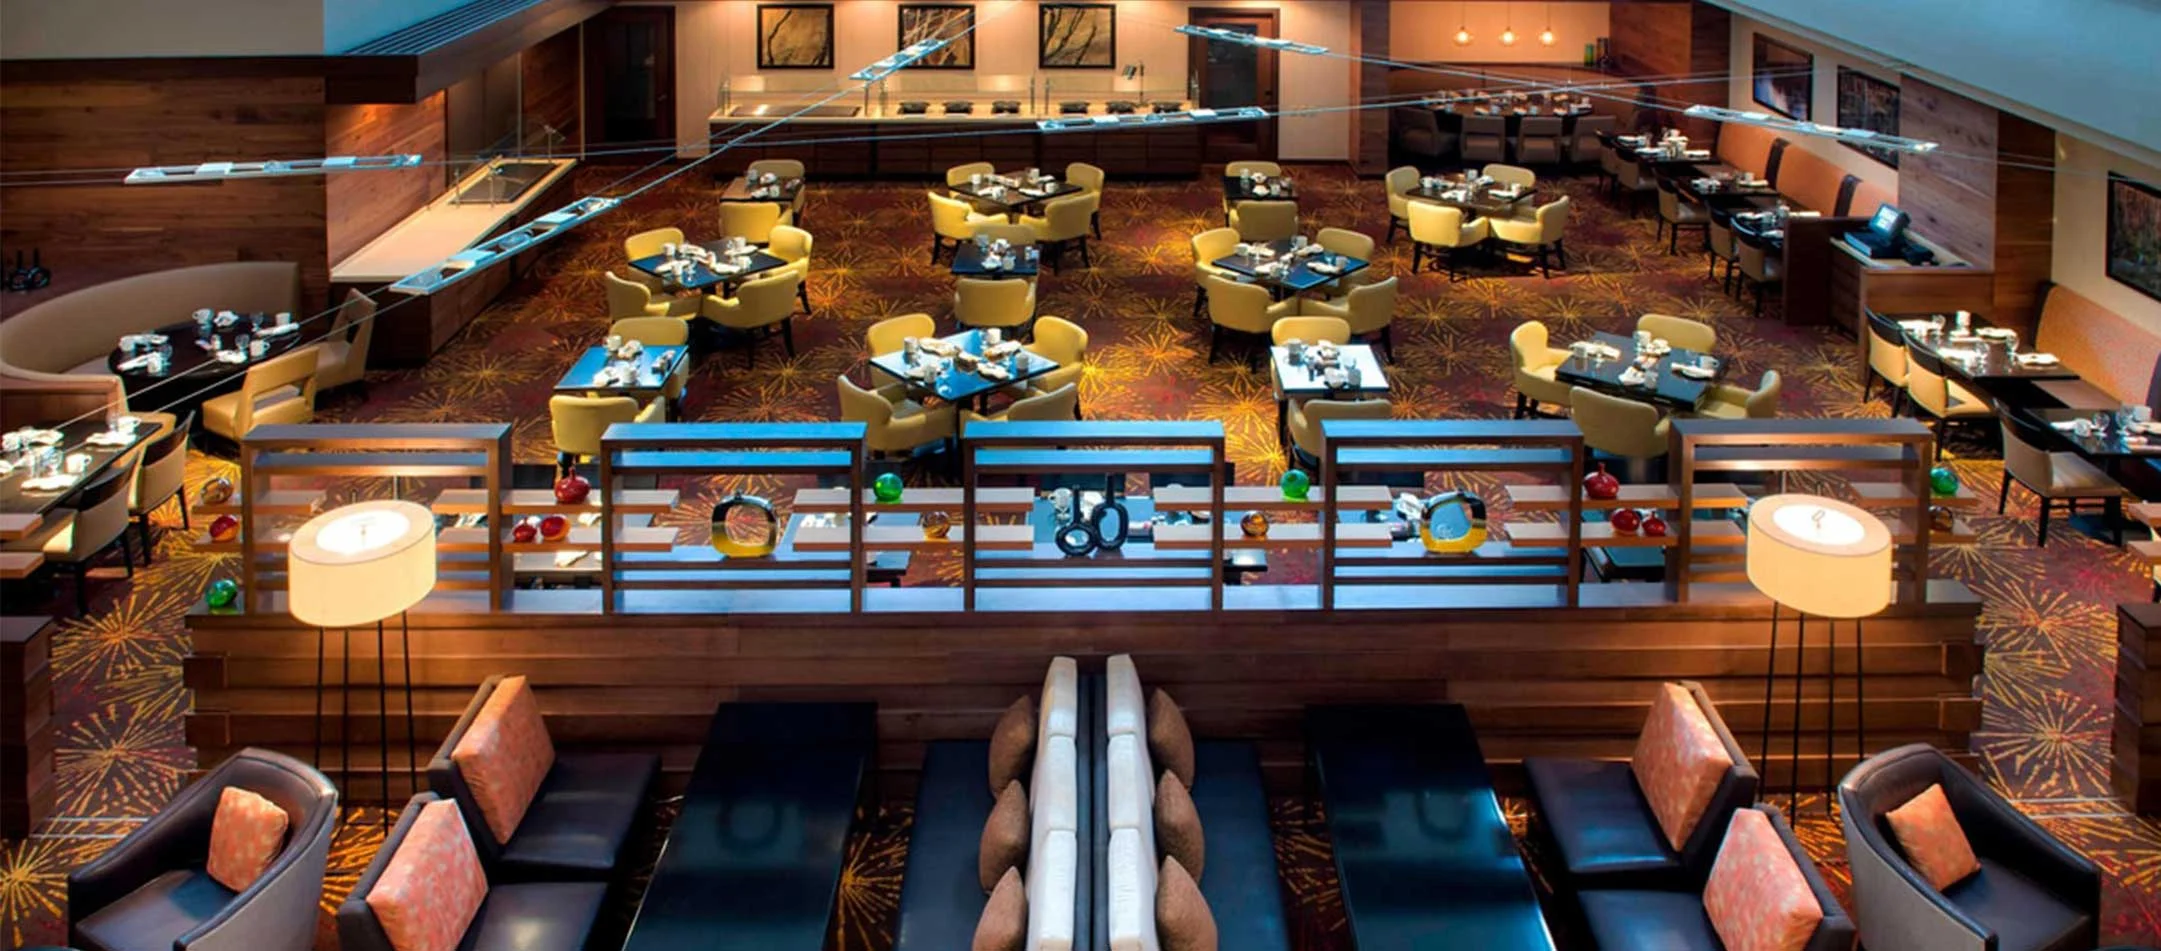 Marriott Park Ridge lobby and dining room